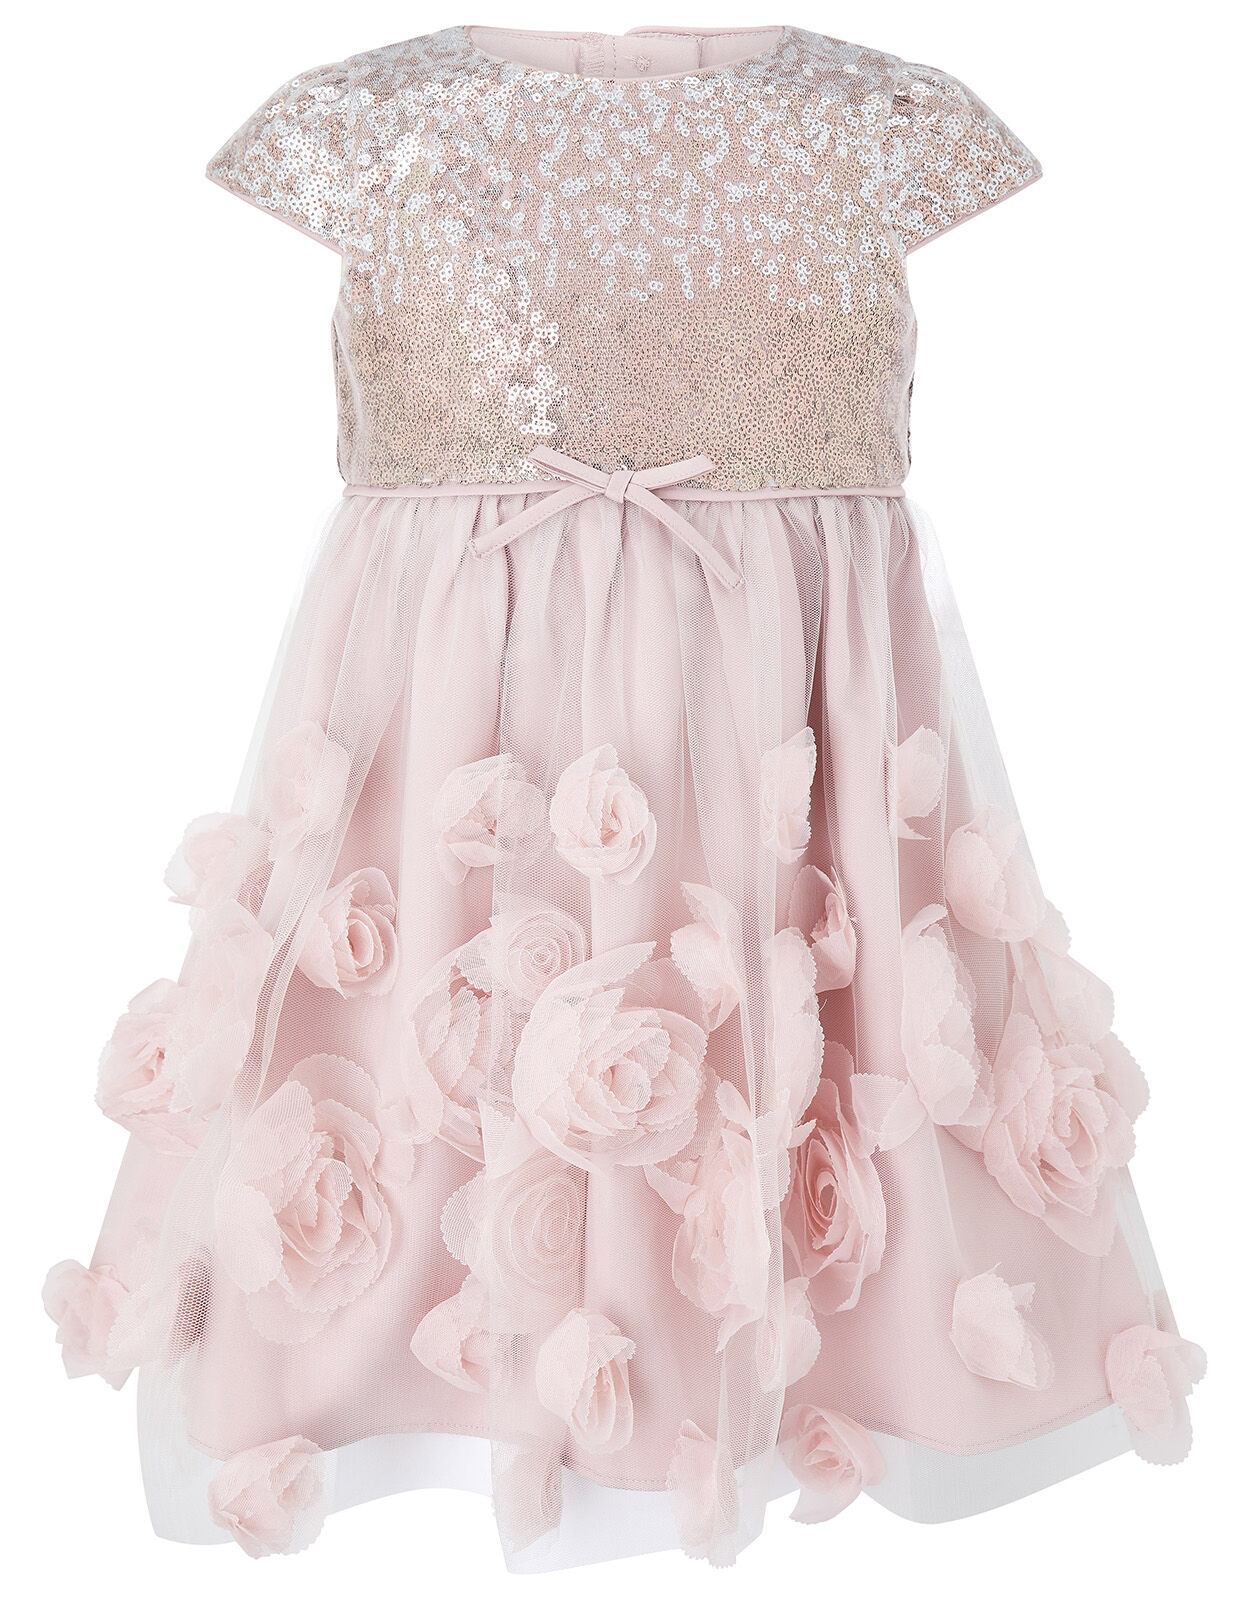 dusky pink sequin dress